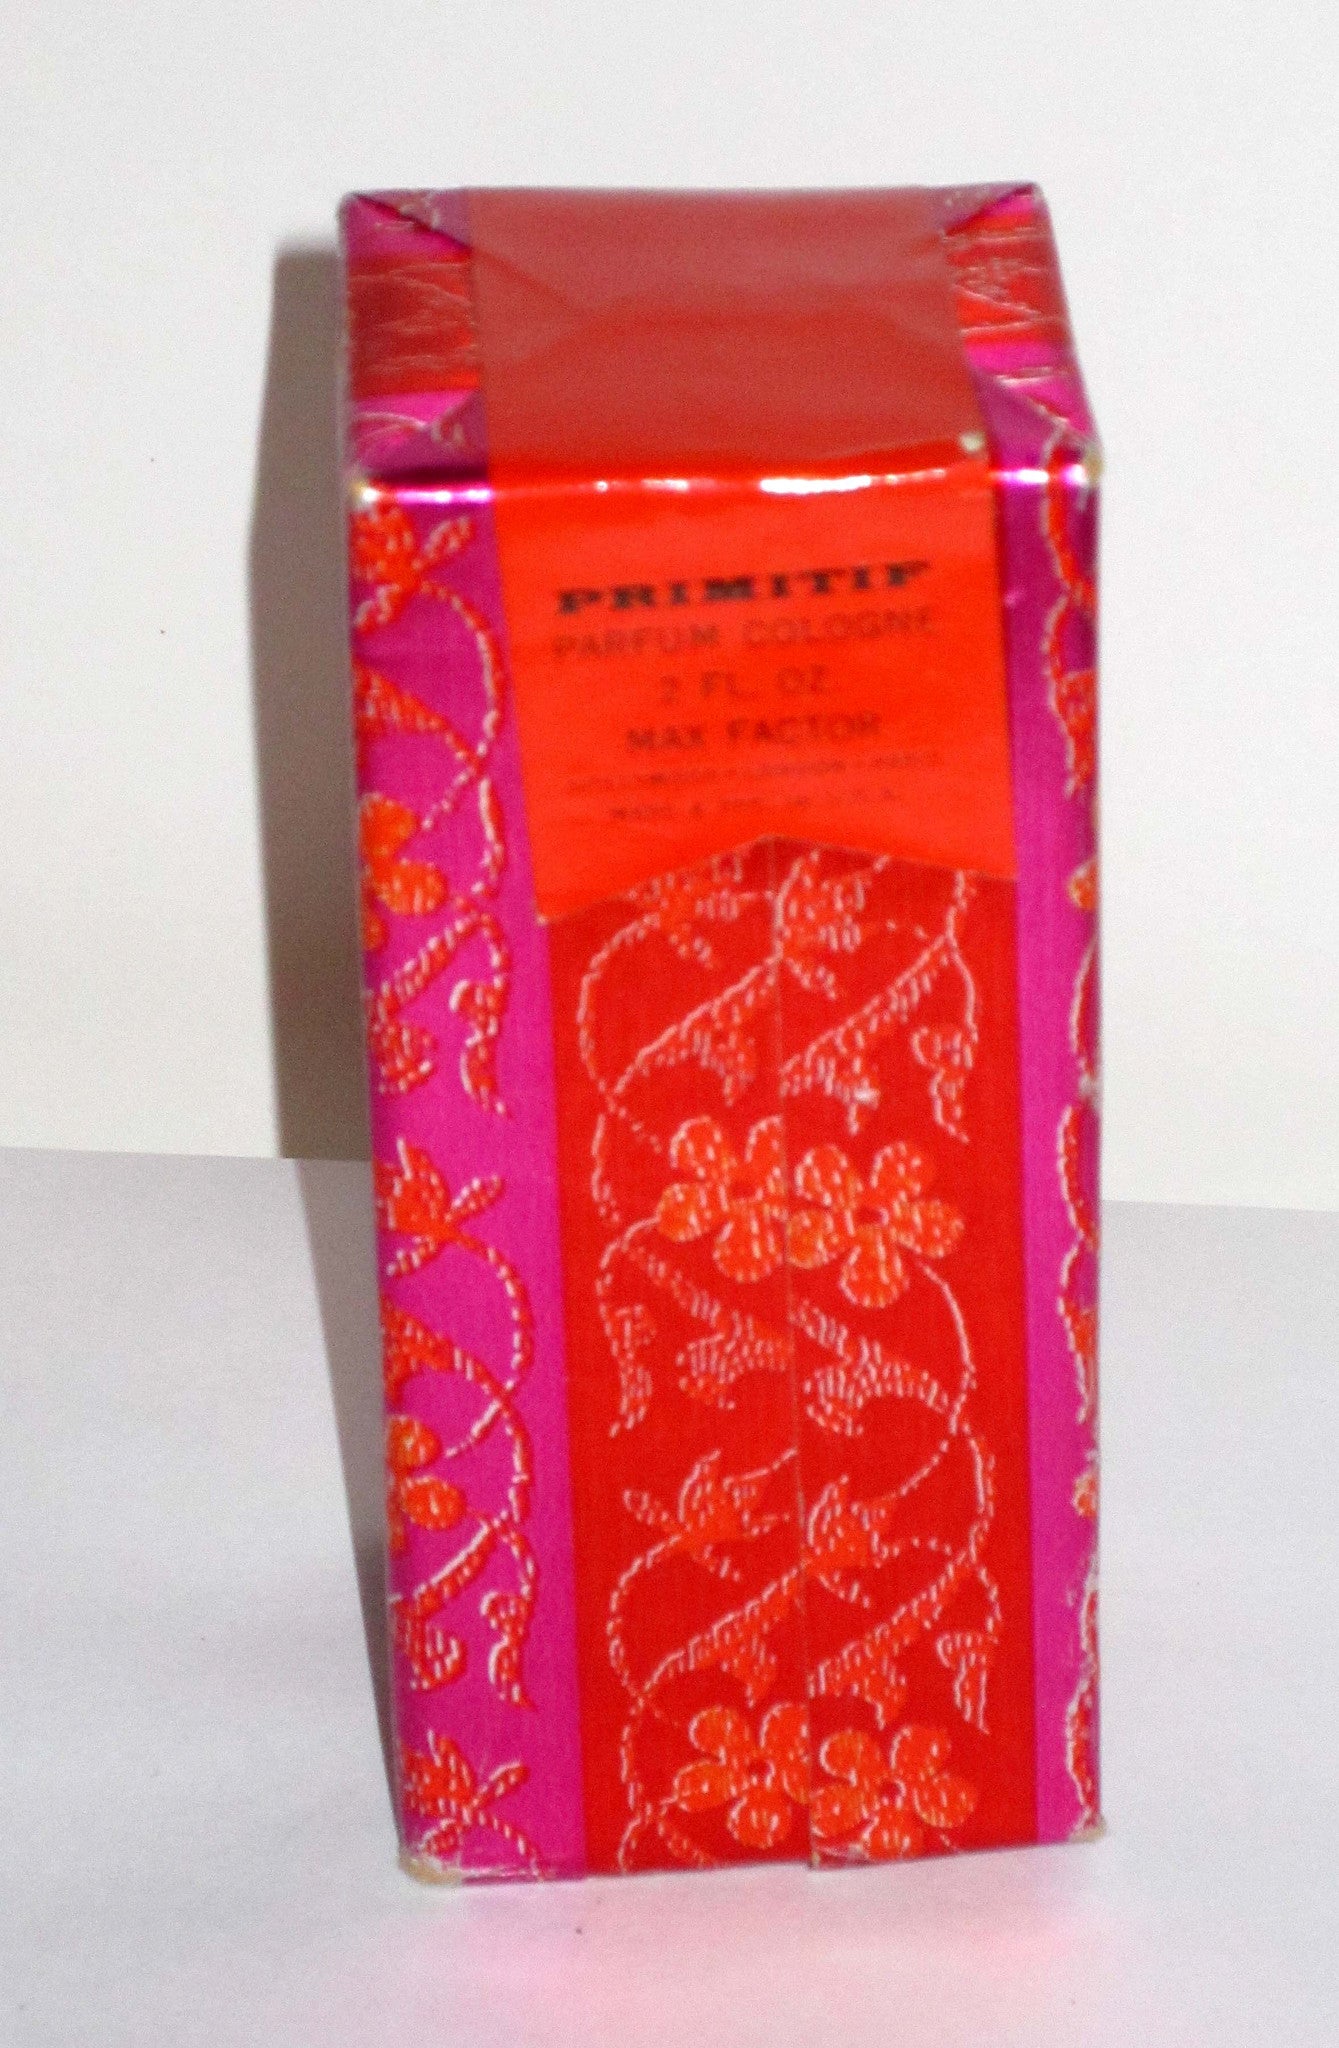 Vintage Primitif Parfum Cologne By Max Factor 